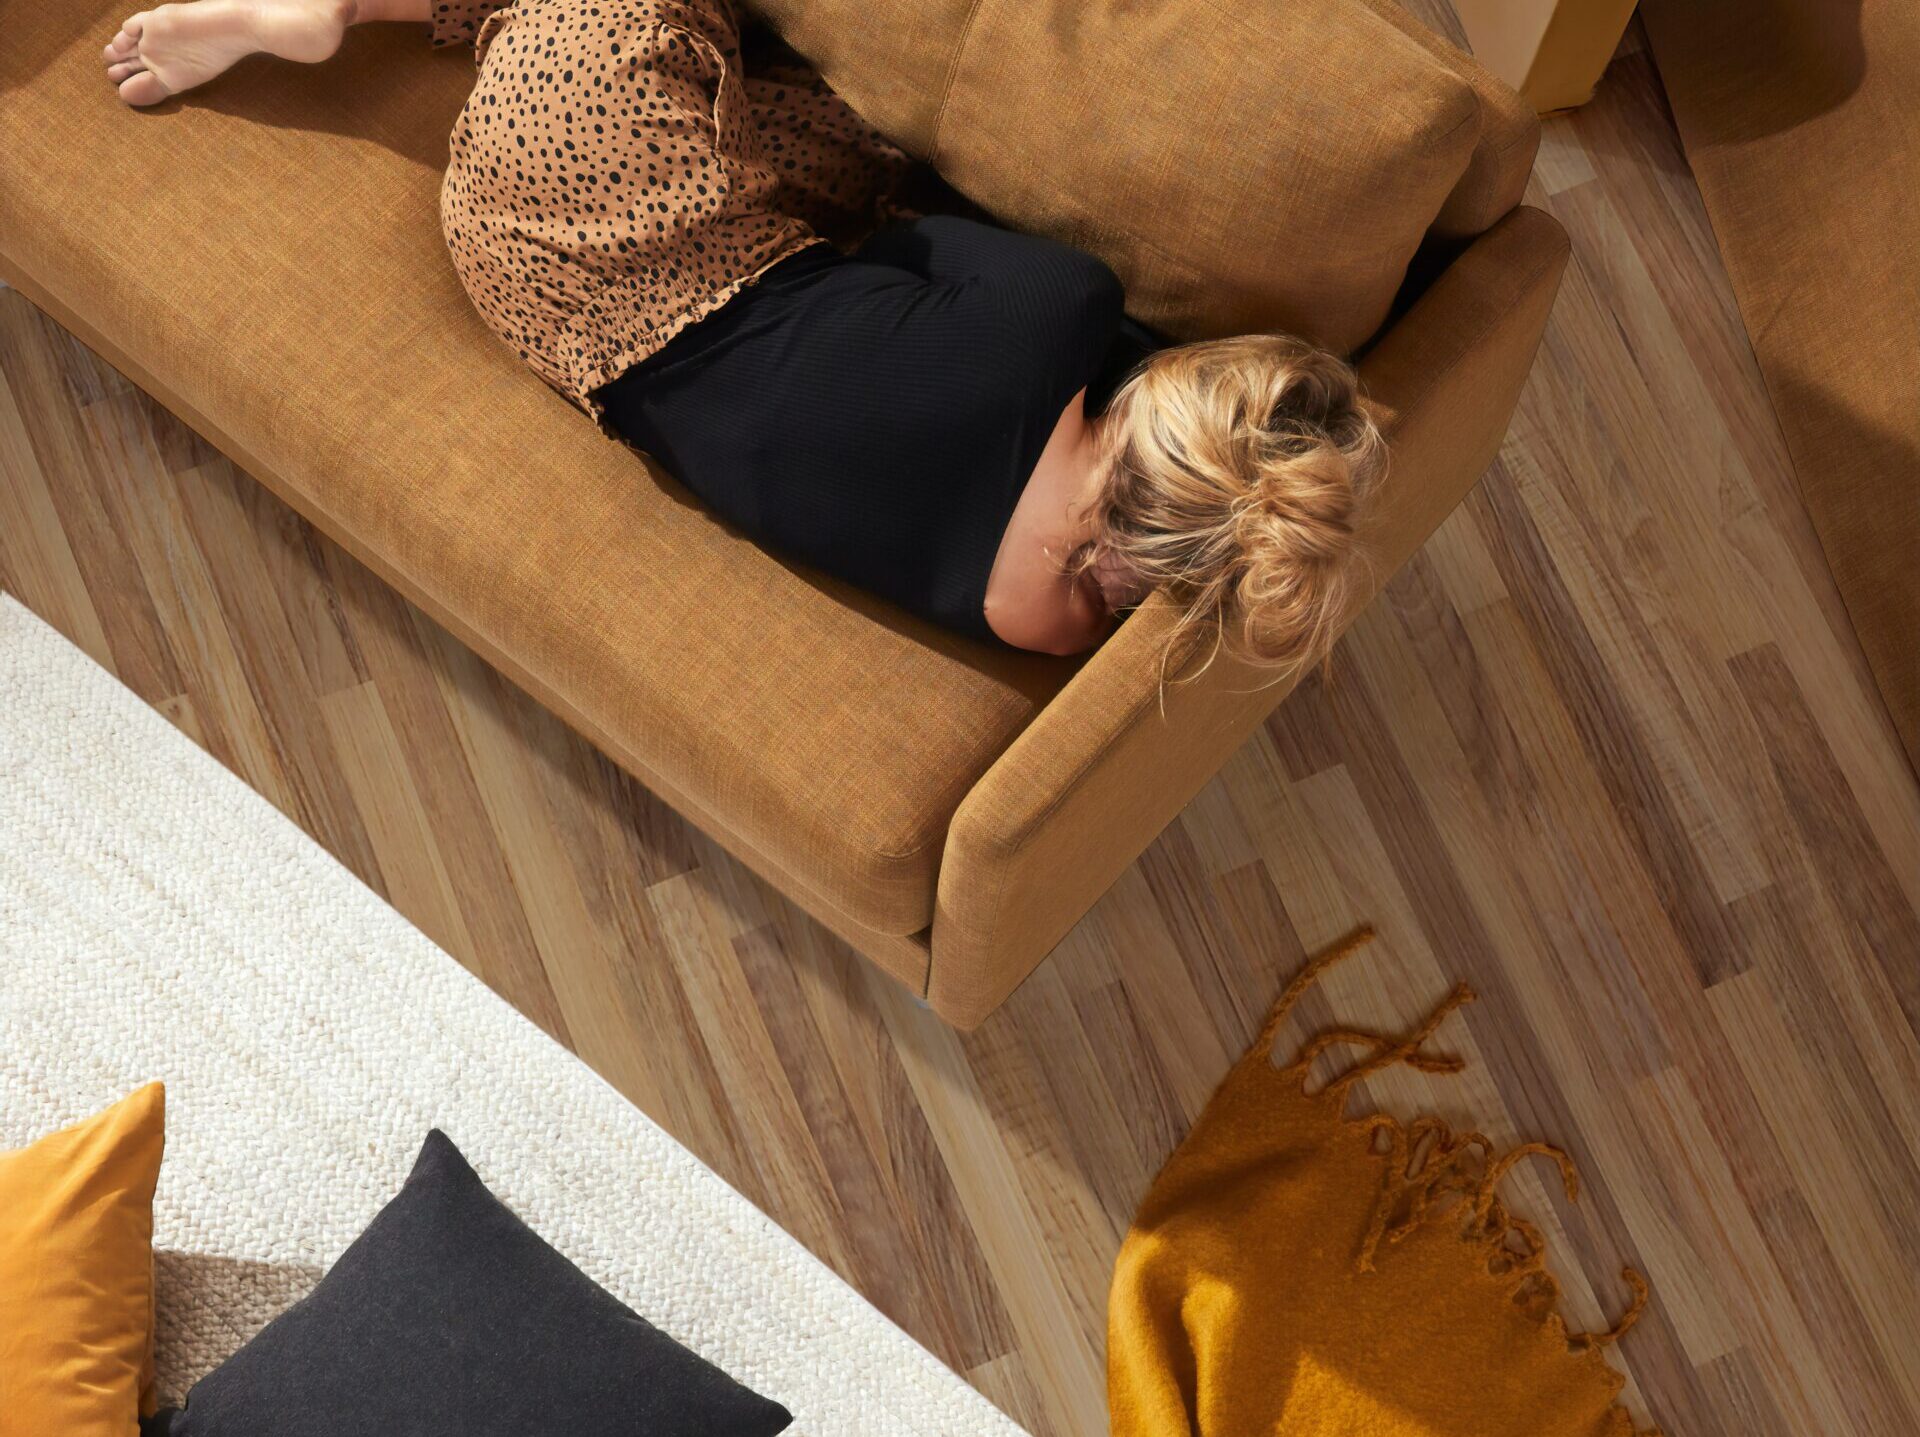 A blonde woman sleeping on a sofa